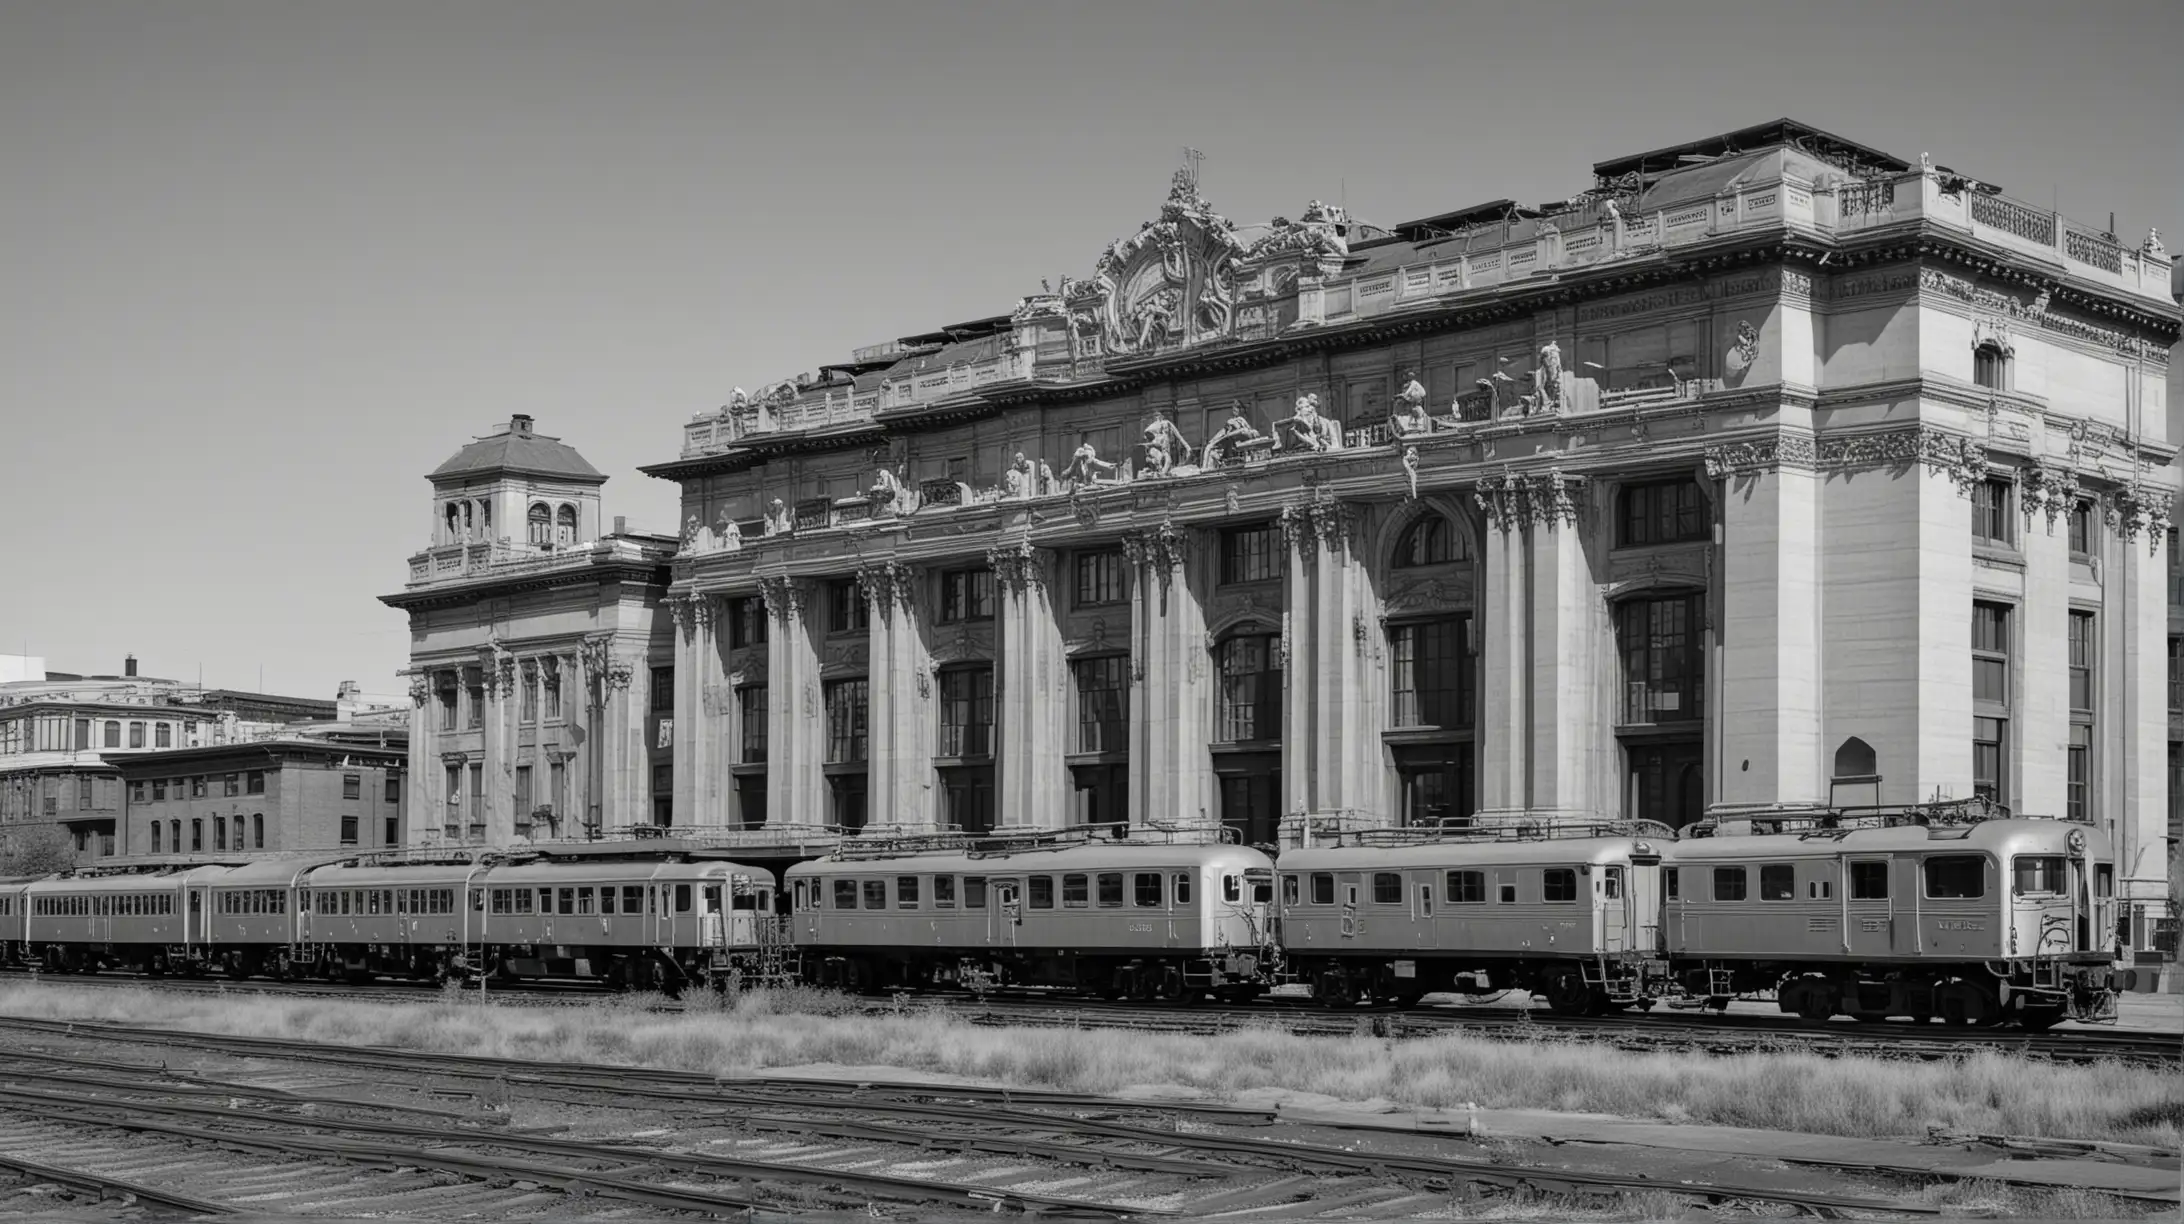 Major City Beaux Arts Railroad Terminal, around 1930. Featuring Art Deco Locomotives and Passenger Cars. Monochrome.